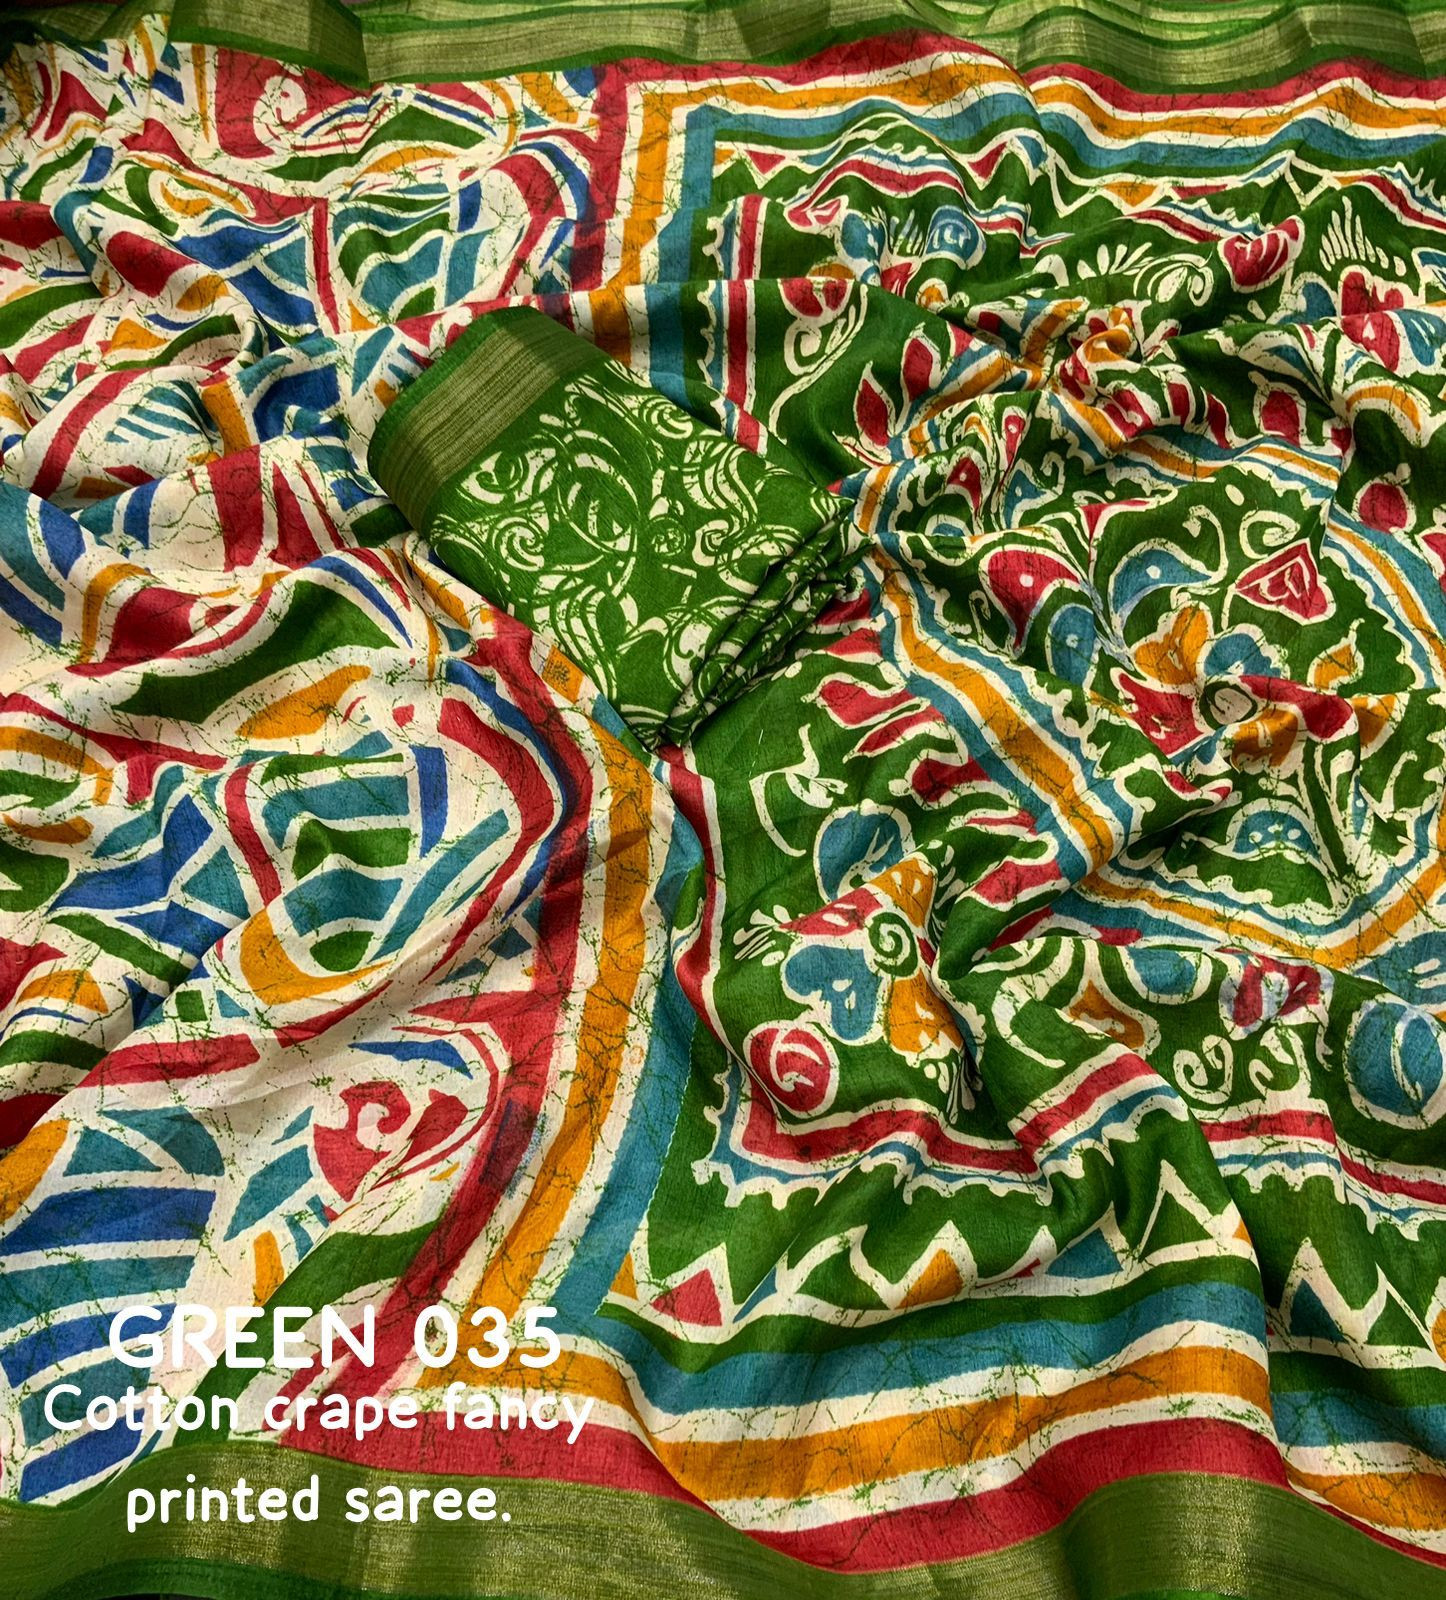 Soft cotton crape batik printed saree - Green